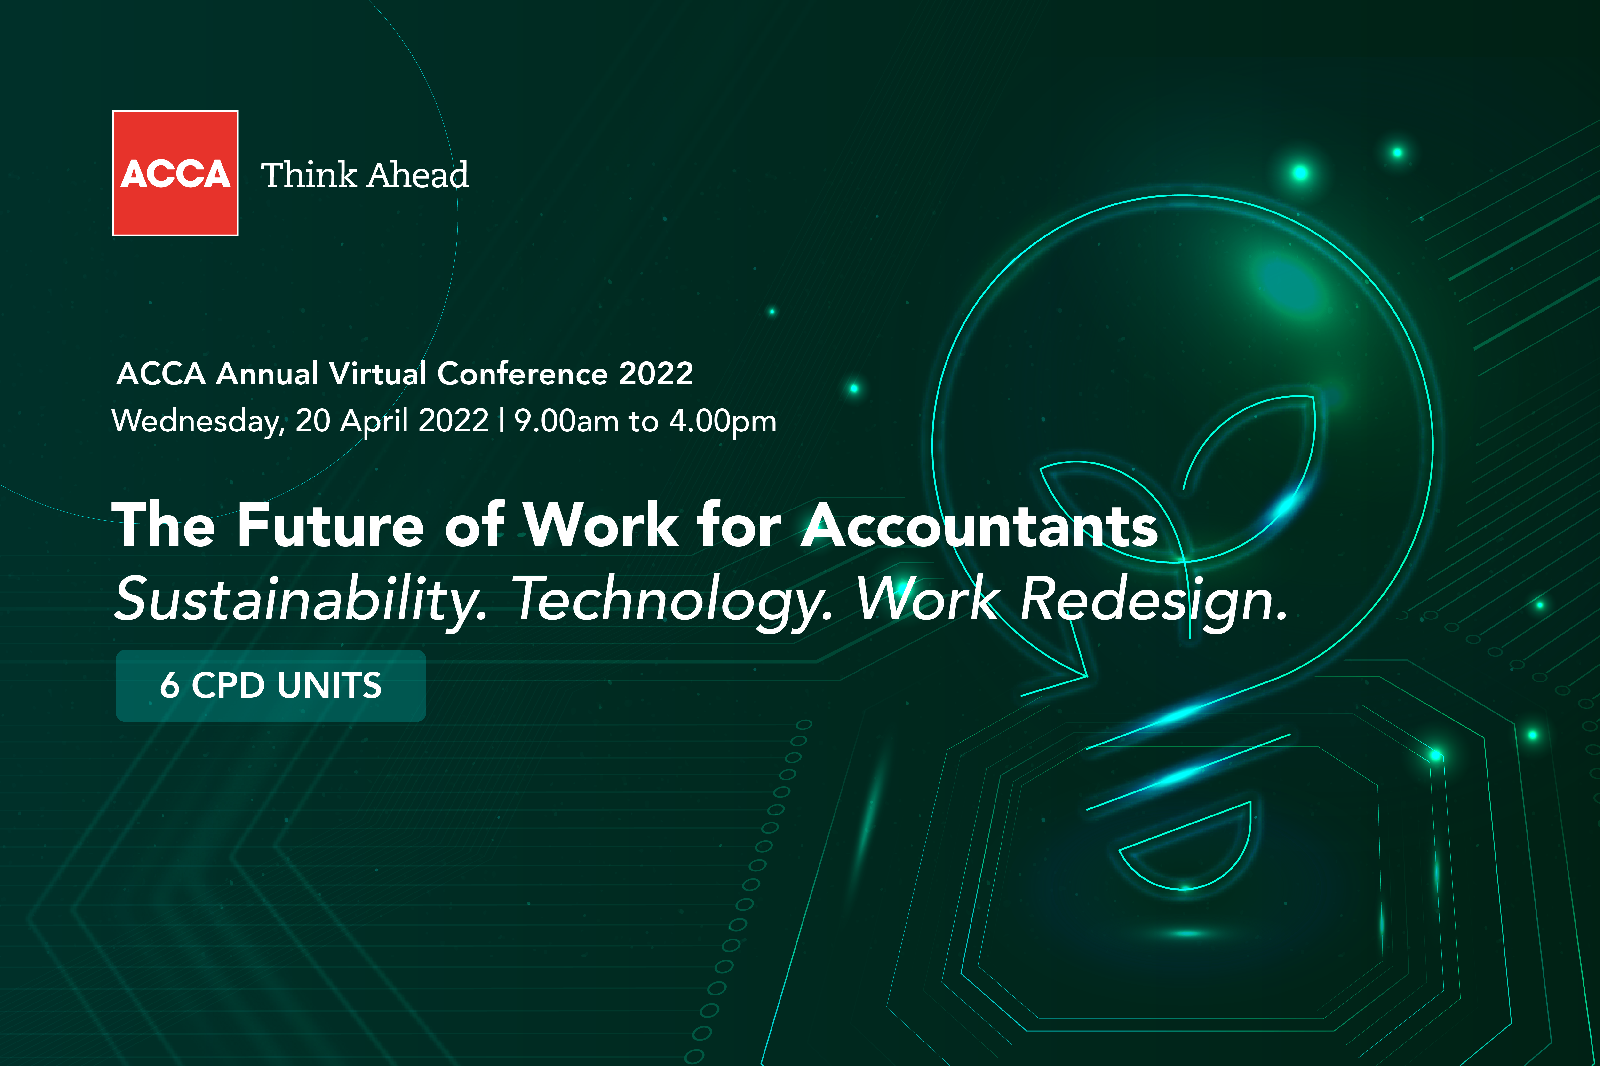 ACCA Annual Virtual Conference 2022